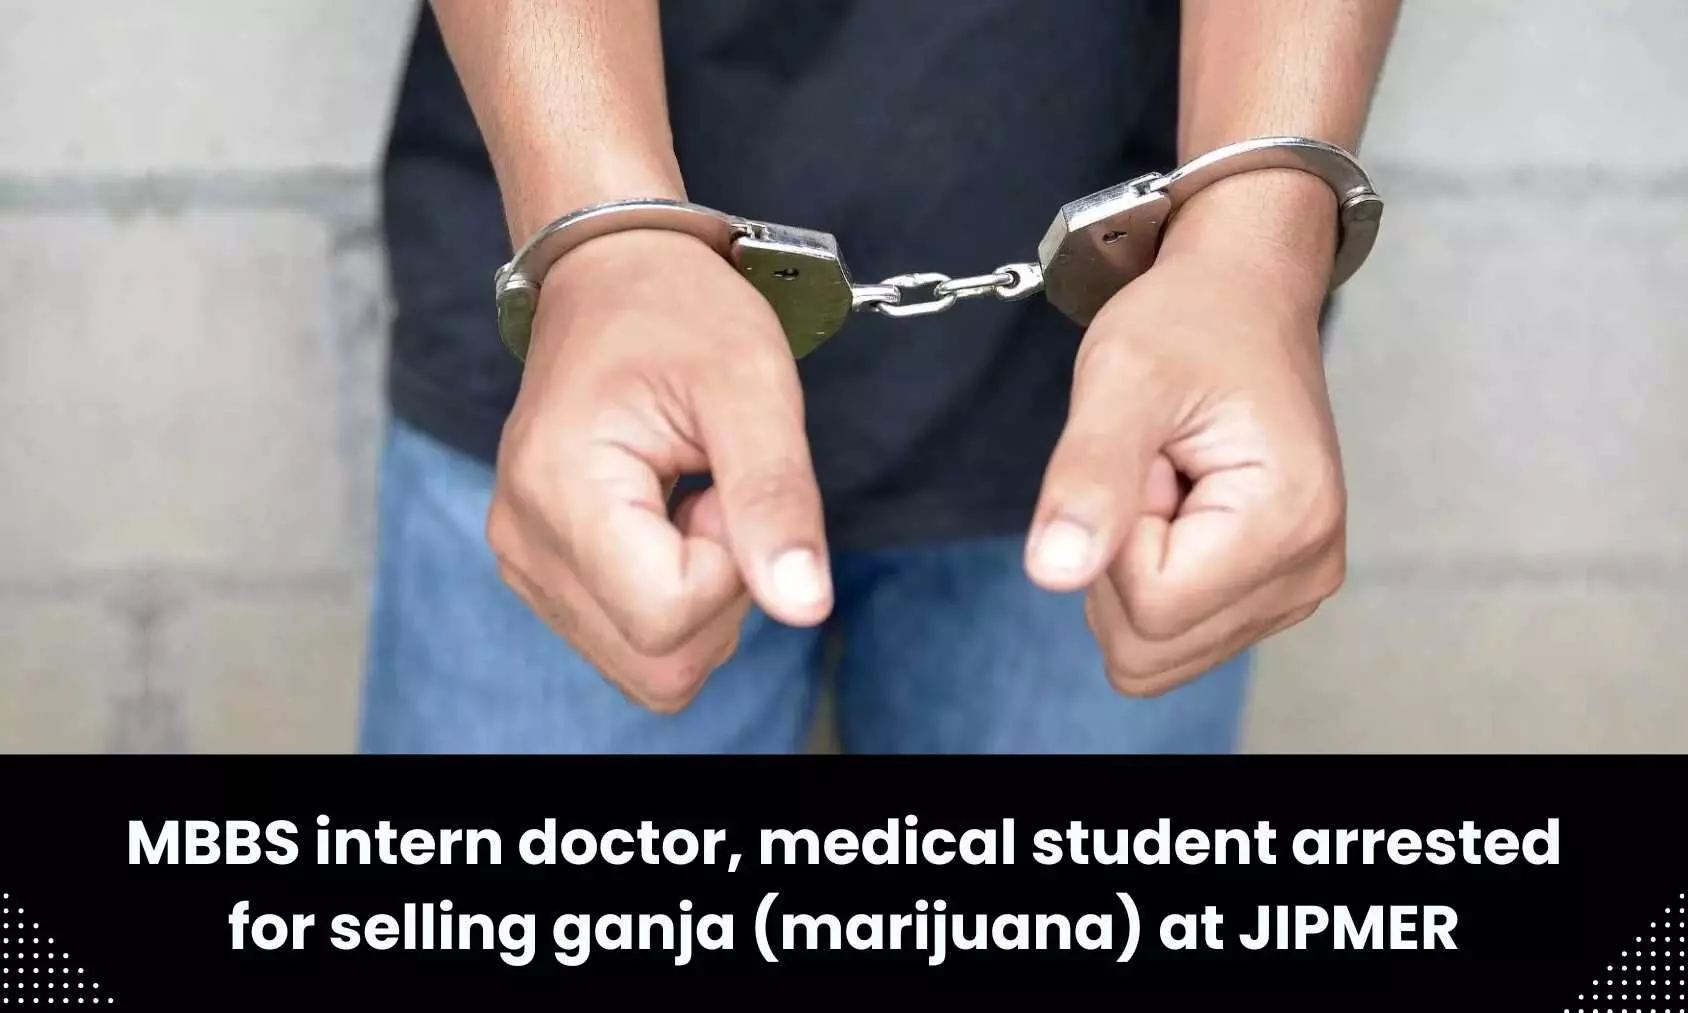 Illegal drug peddling: Medical student, MBBS intern doctor held for selling ganja at JIPMER